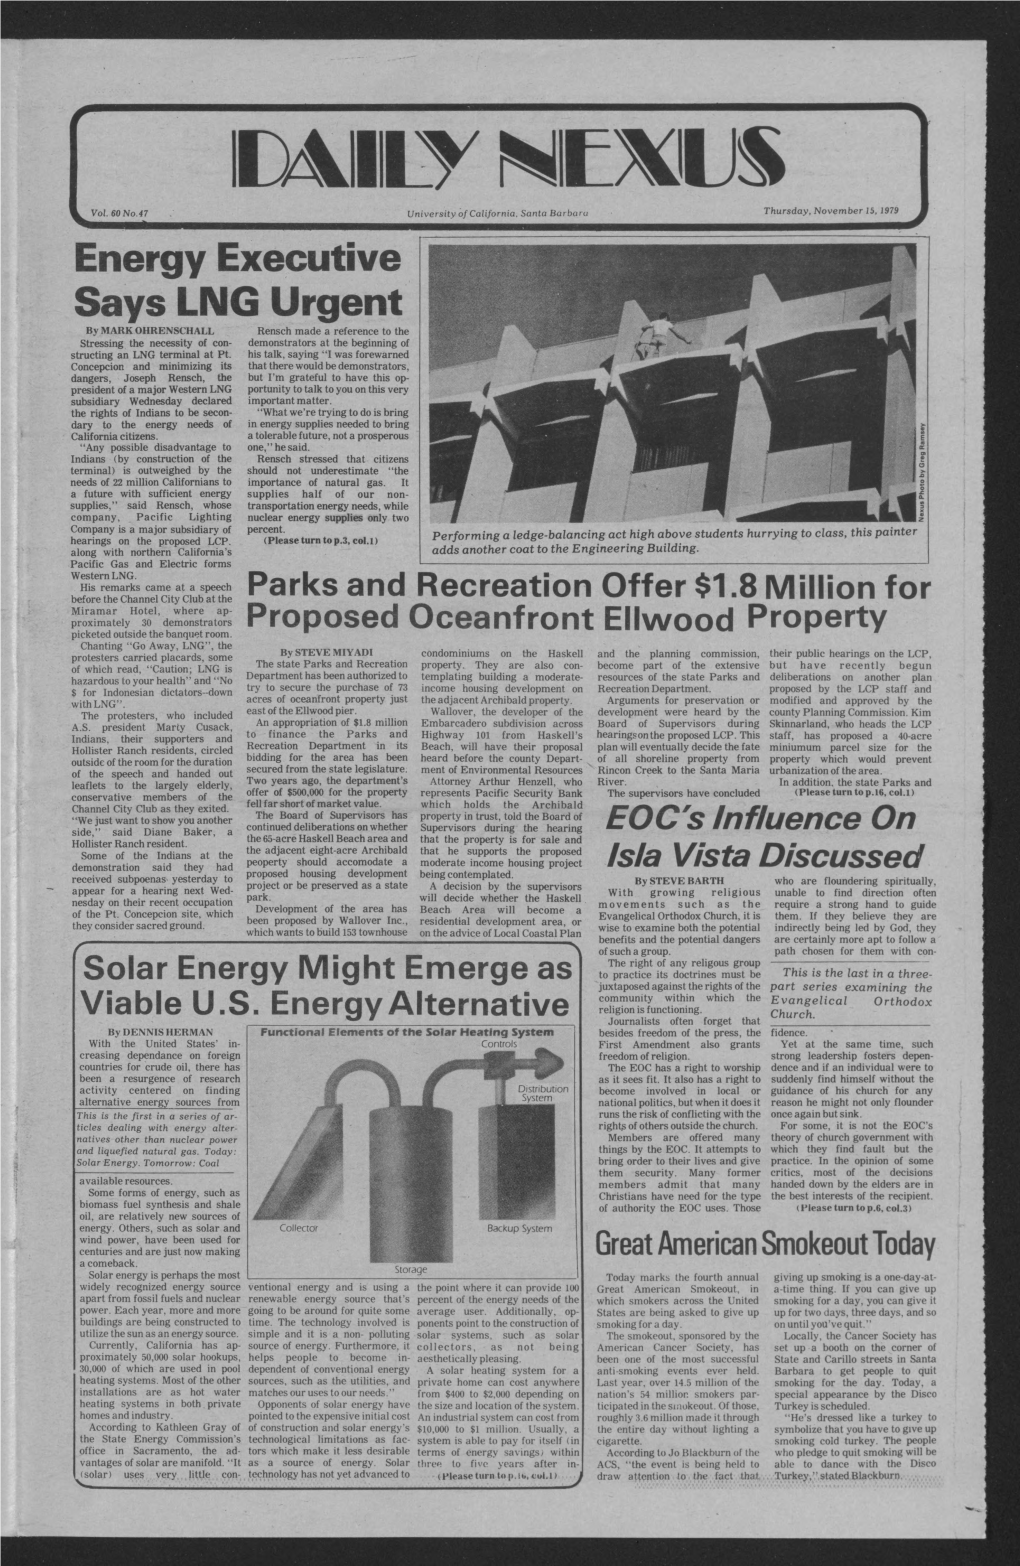 Energy Executive Says LNG Urgent